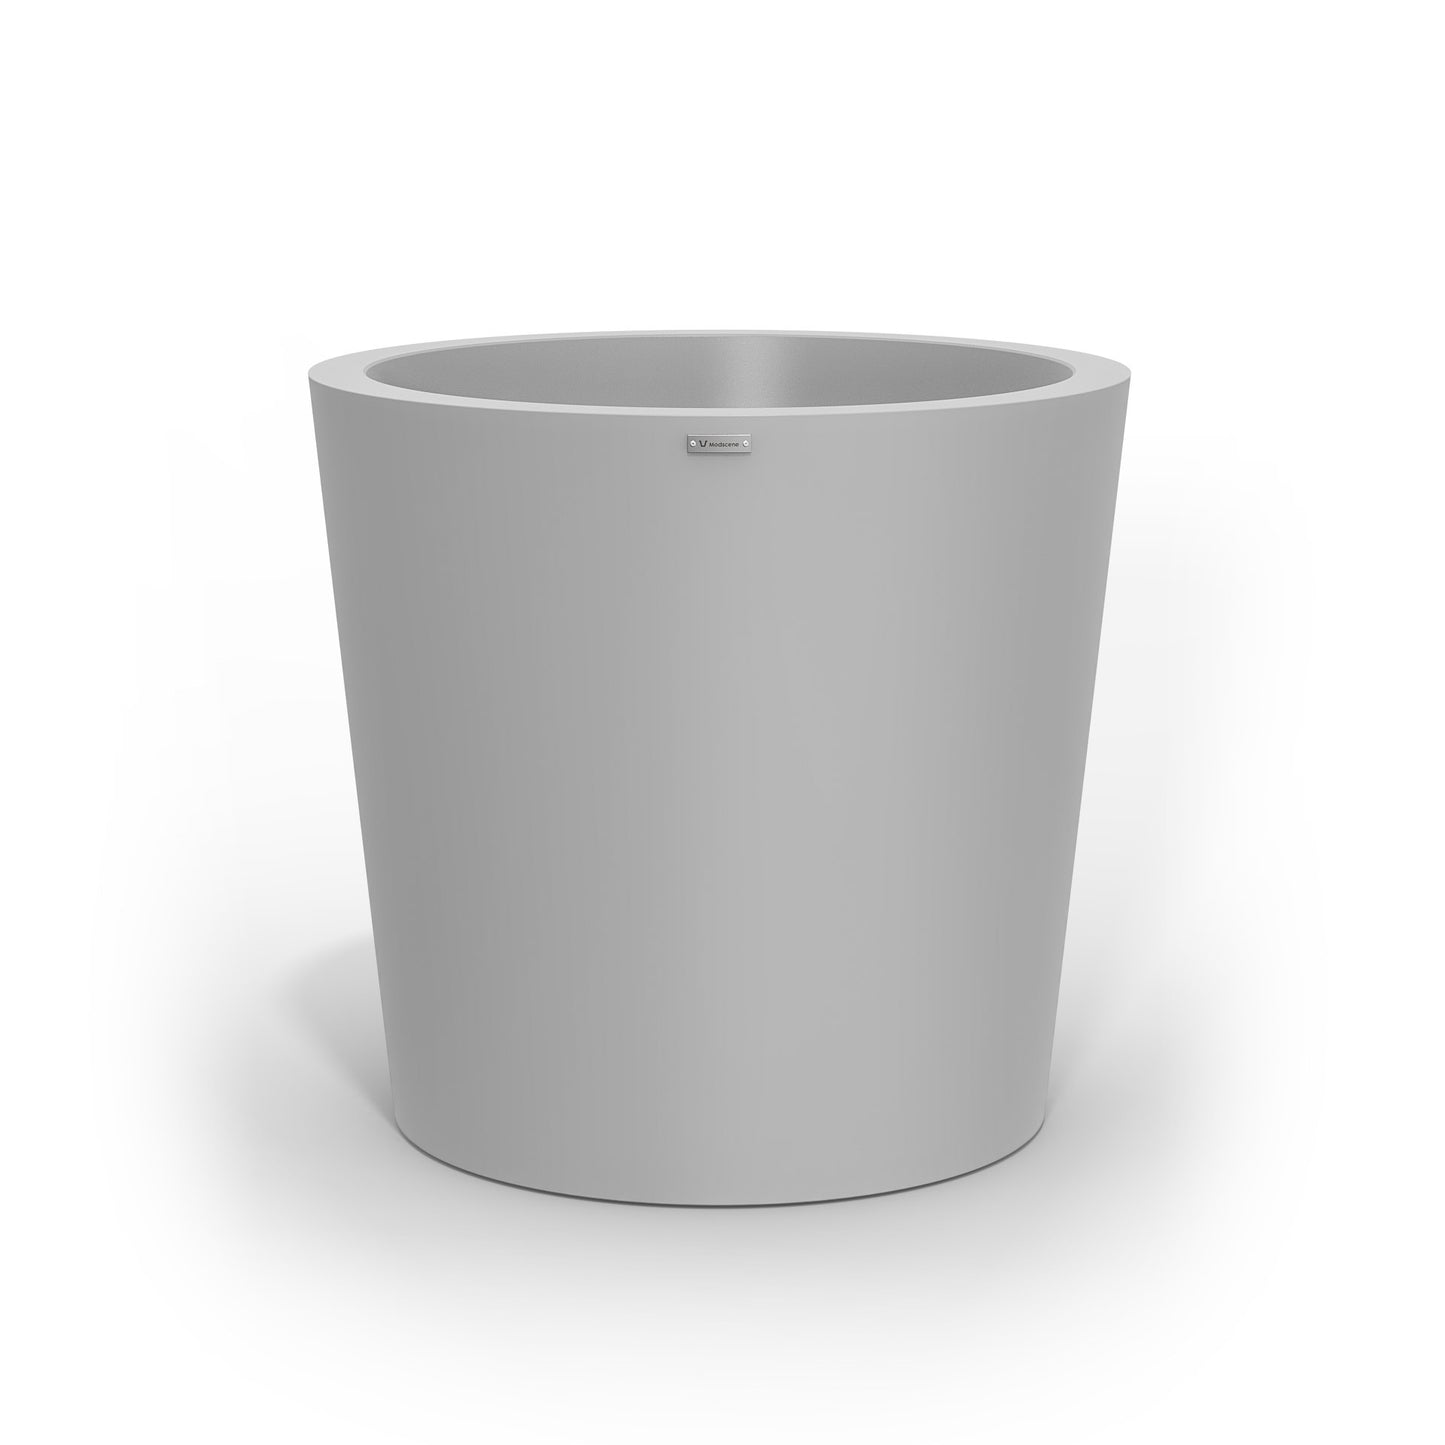 A large Modscene pot planter in a light grey colour.